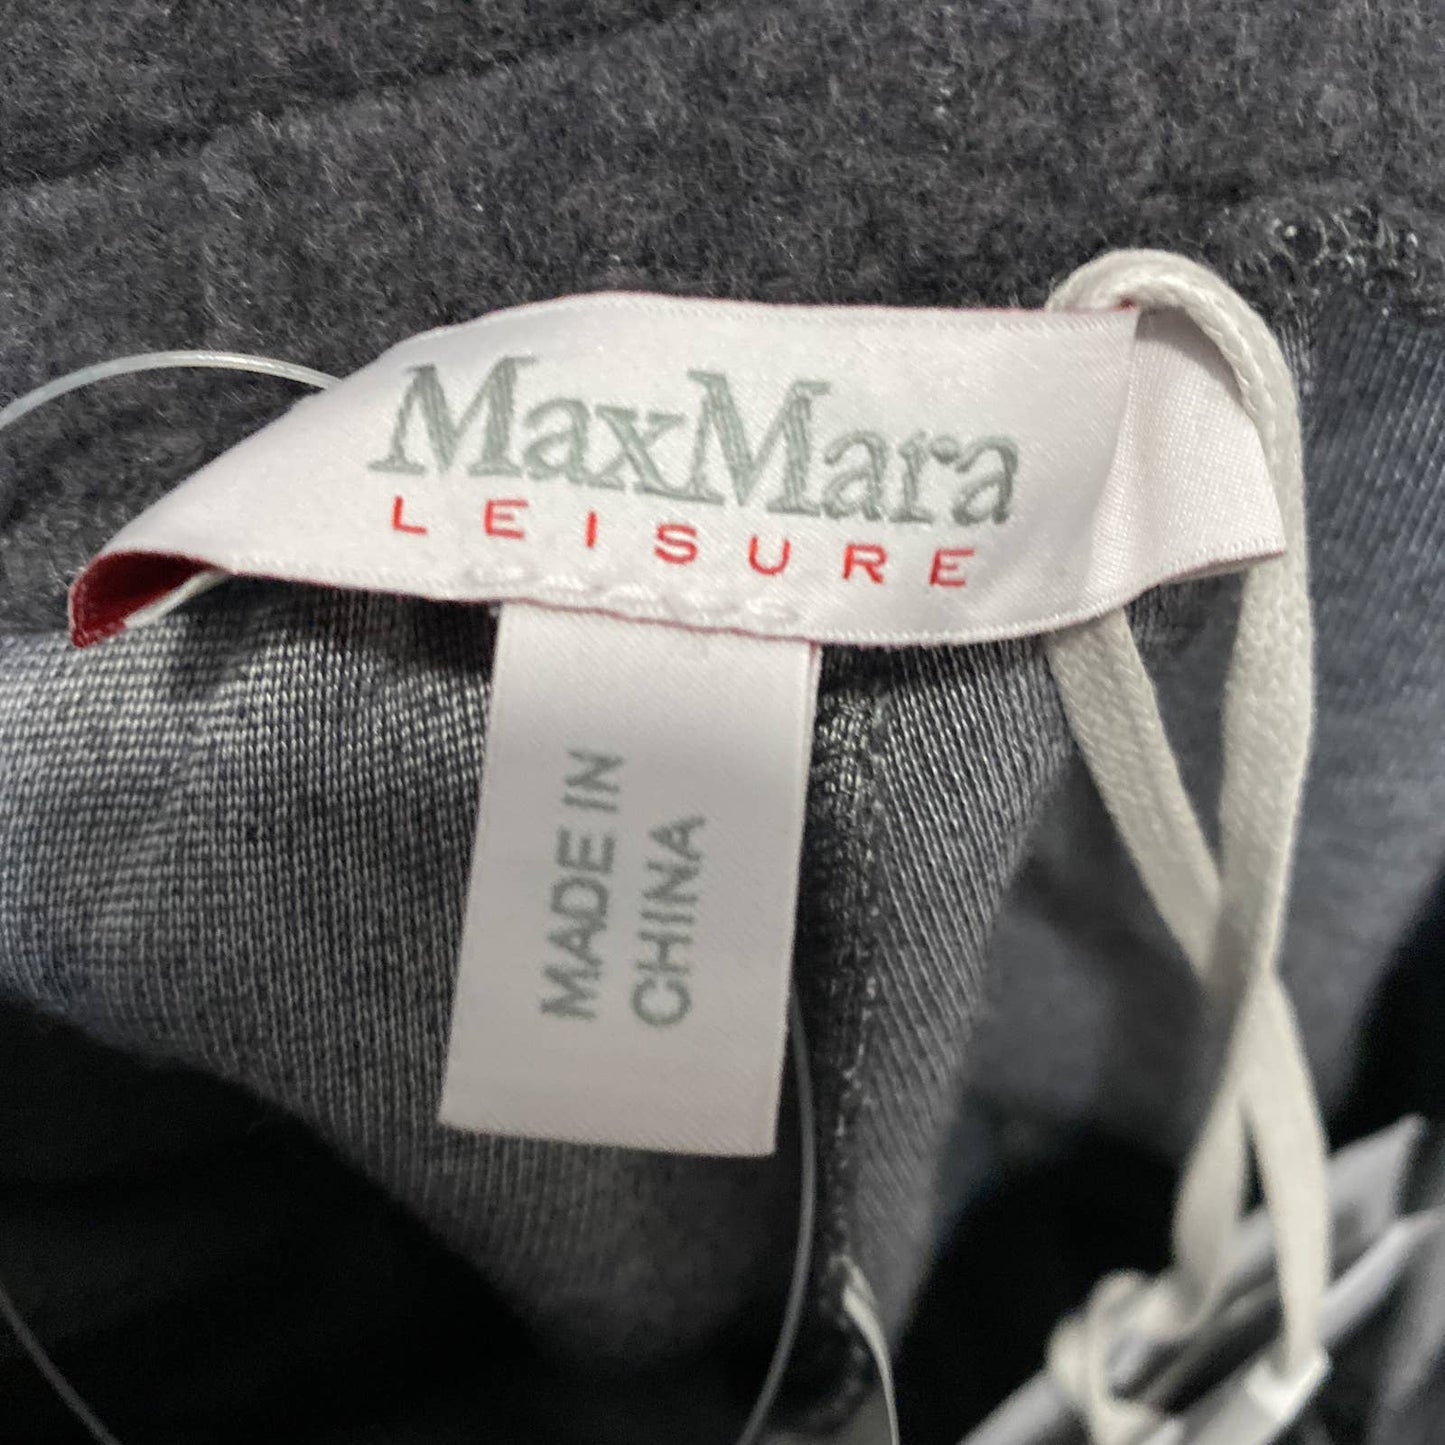 Max Mara Leisure | Ricerca Drawstring Jersey Pants